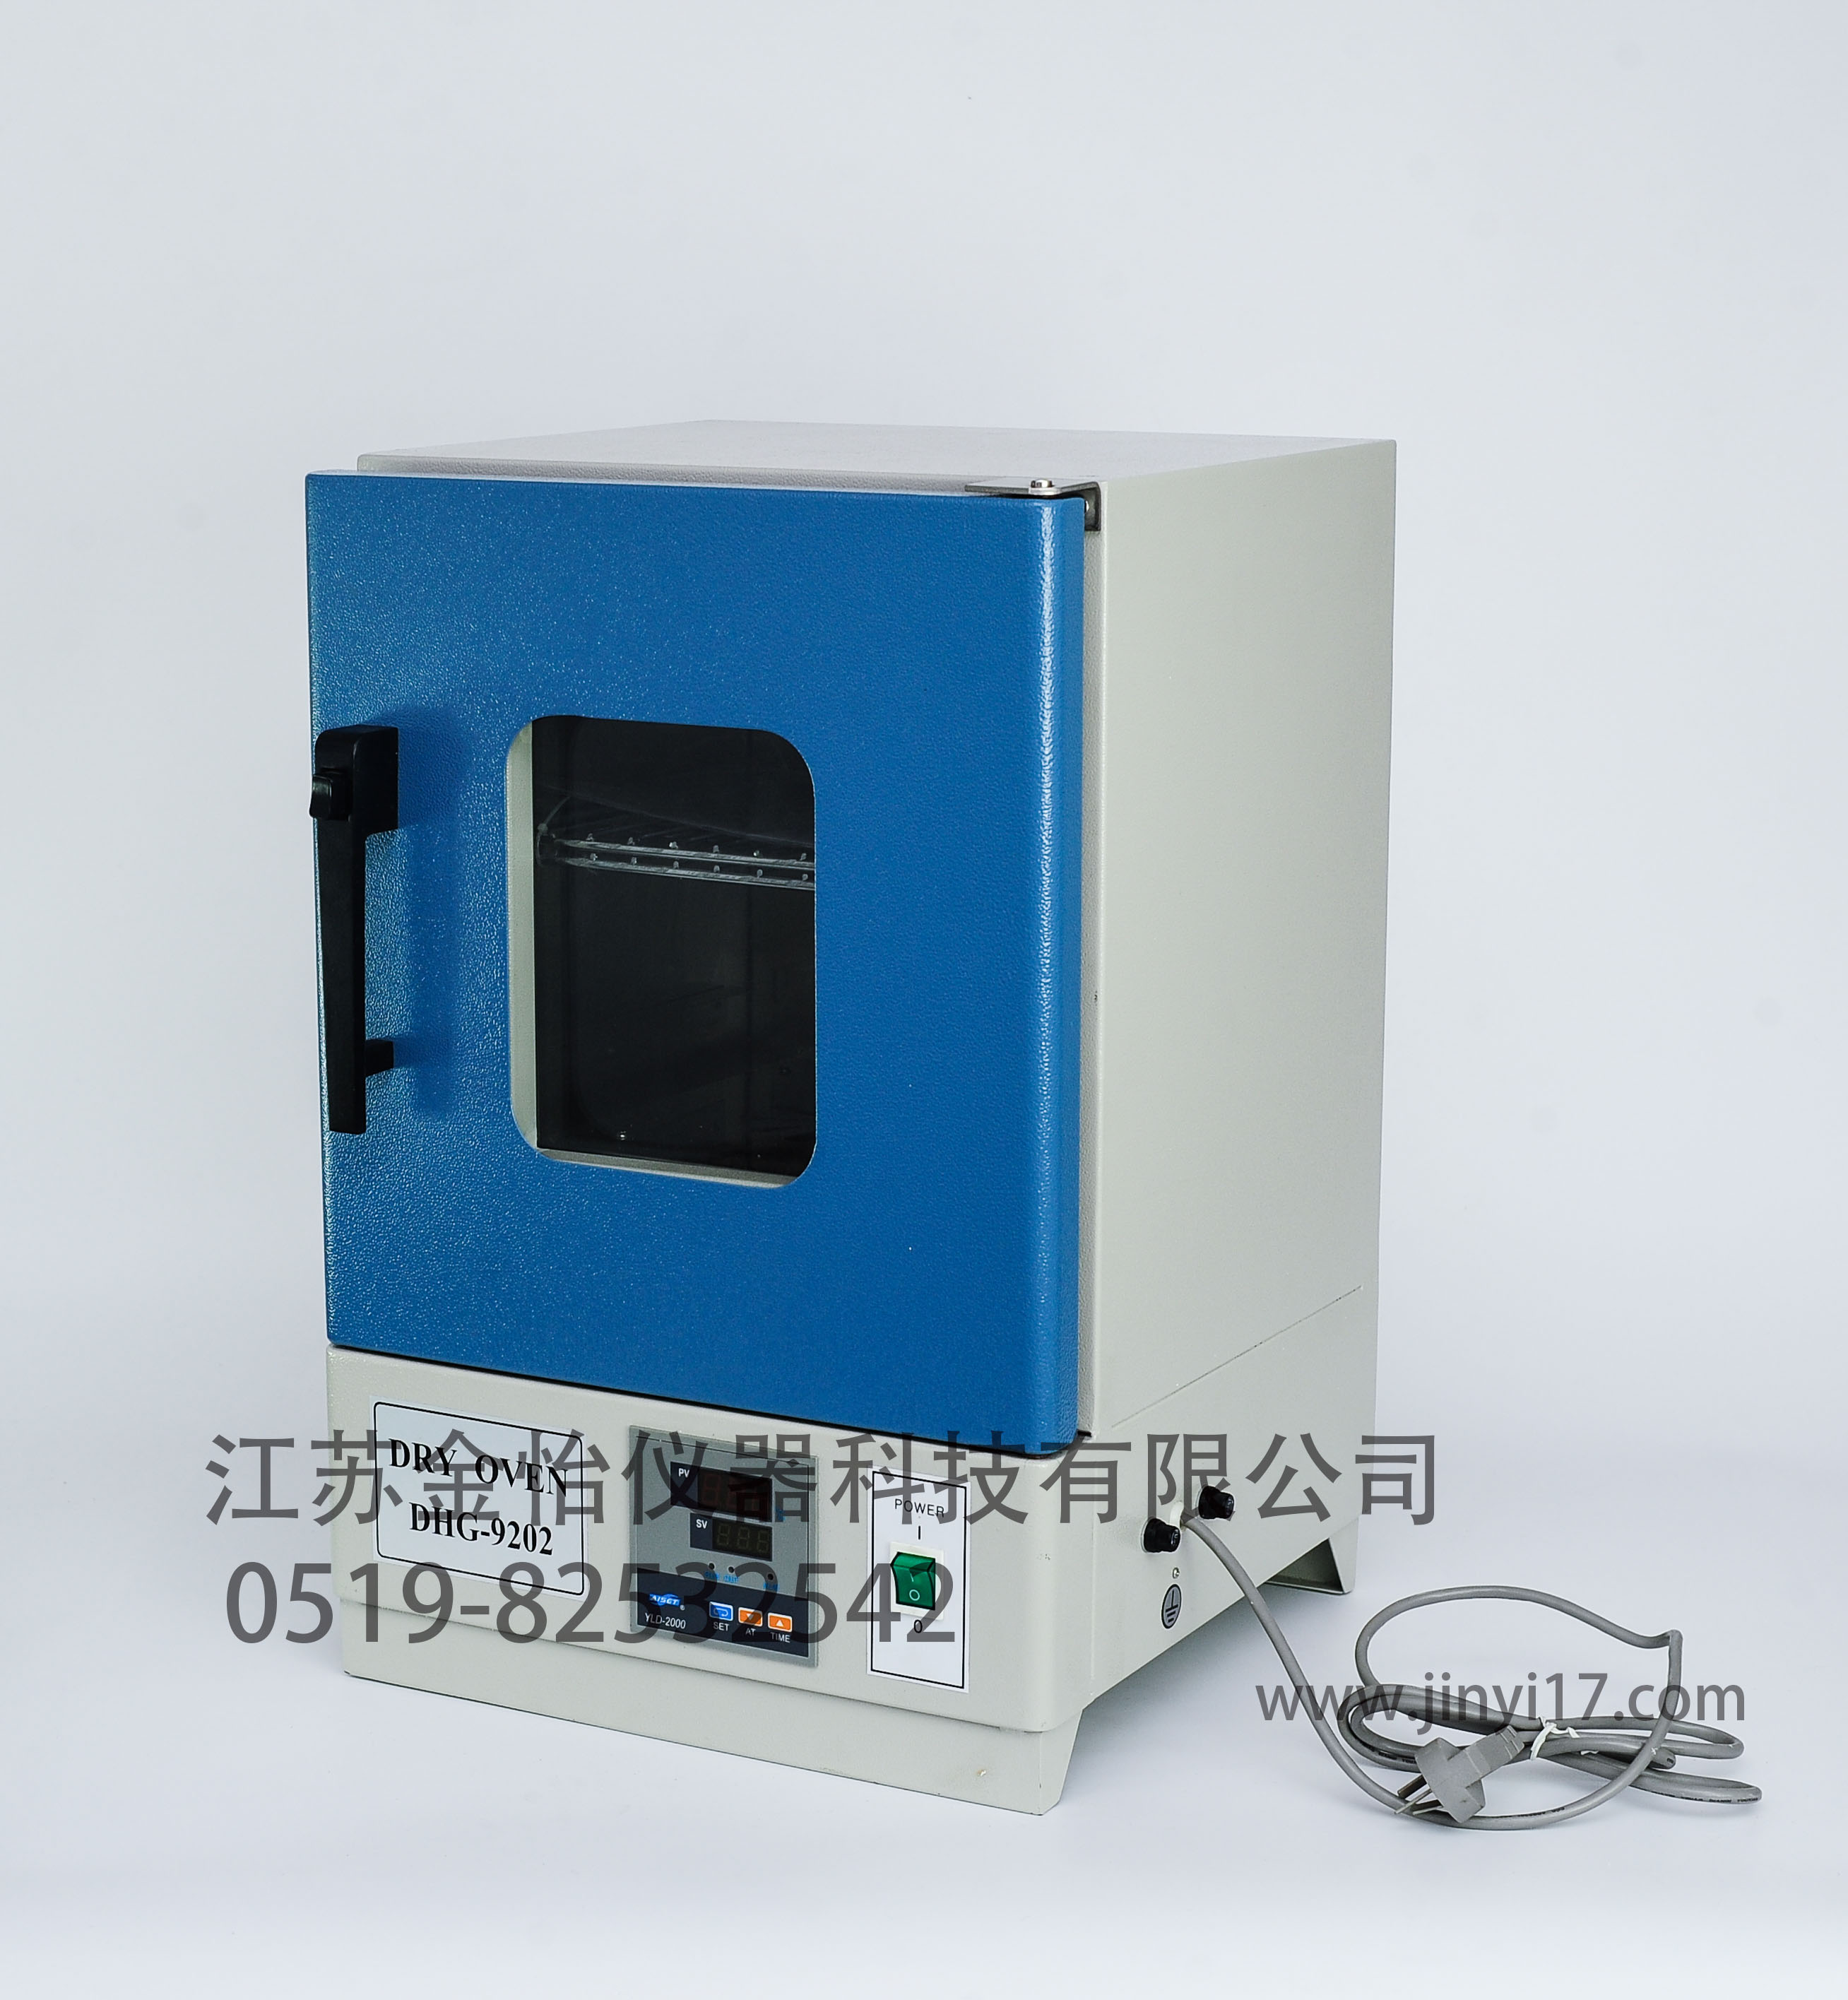 DHG-20  电热恒温干燥箱